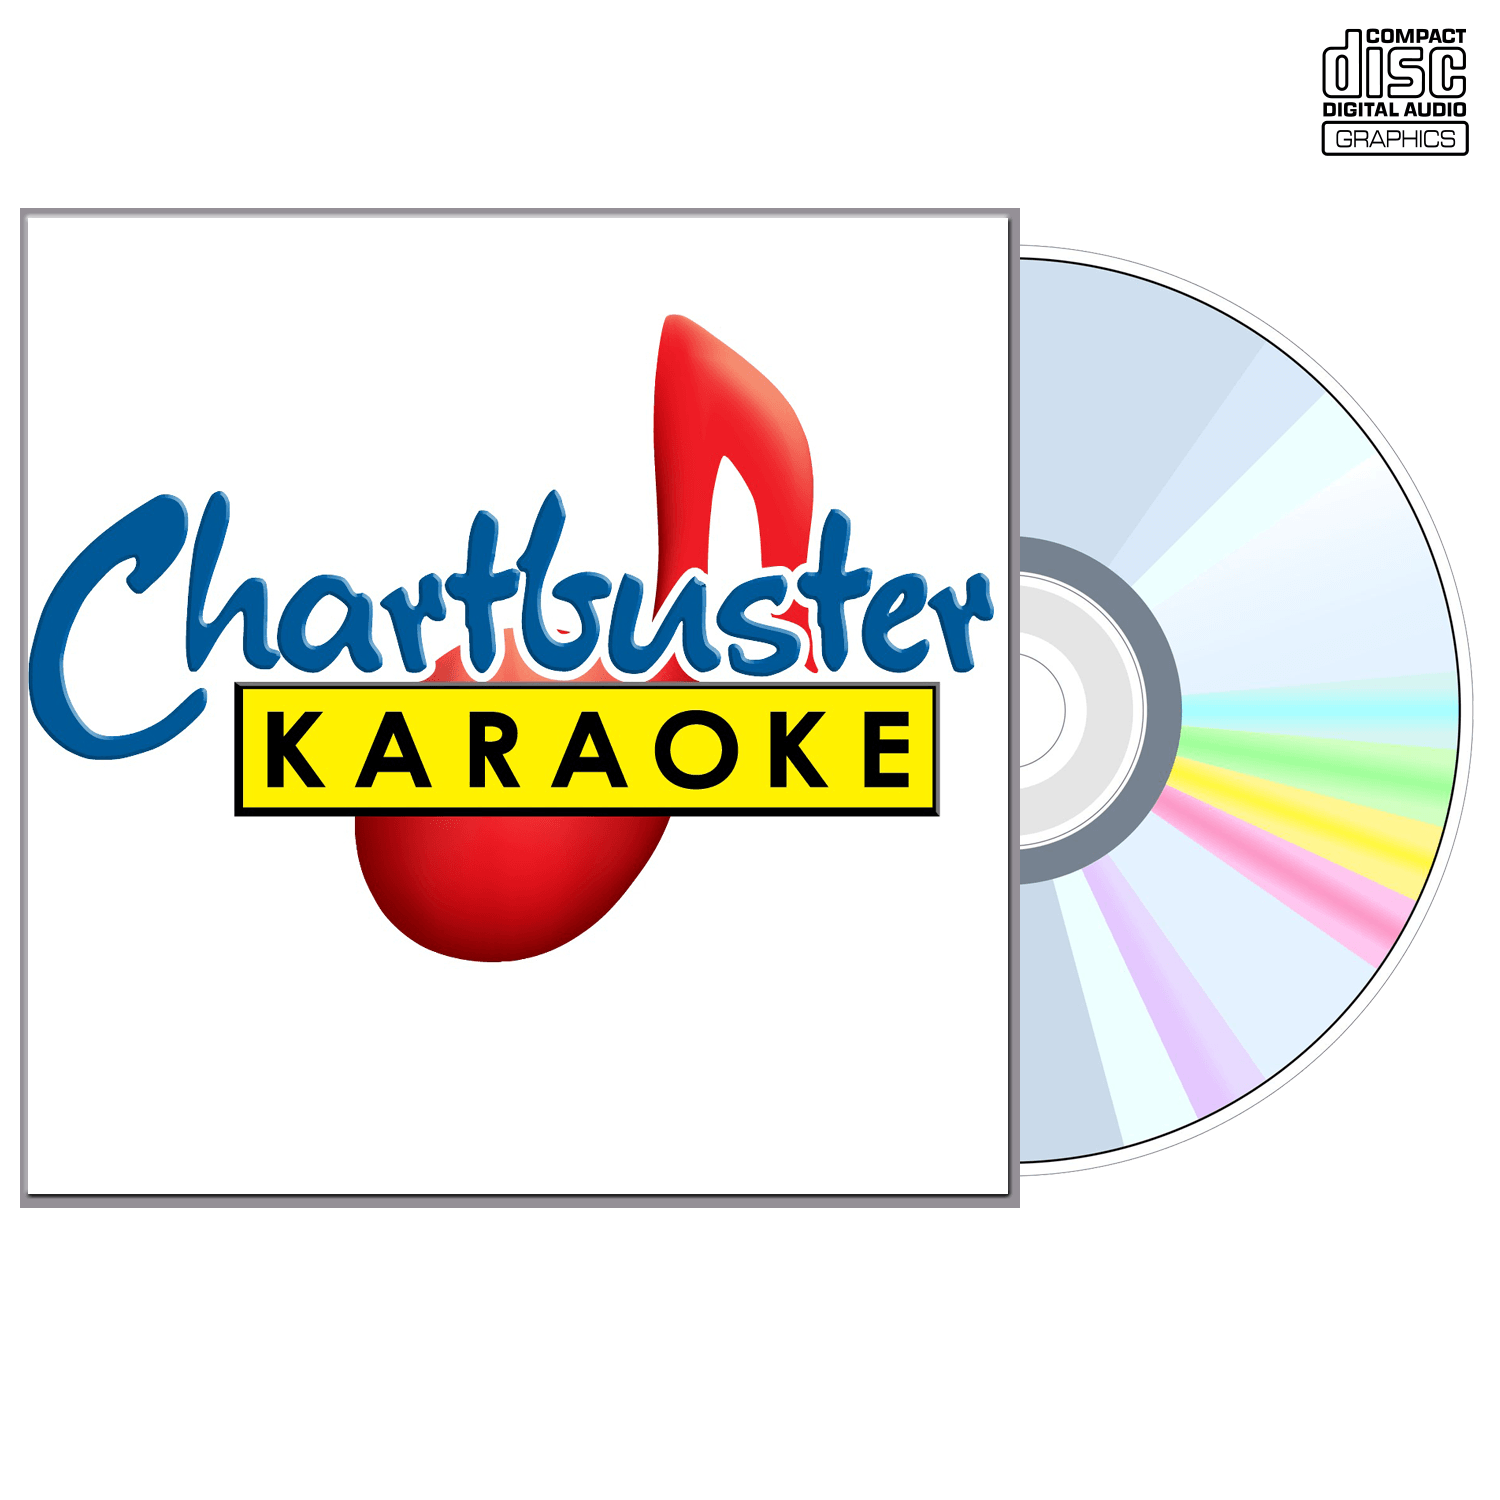 Tammy Wynette Vol 3 - CD+G - Chartbuster Karaoke - Karaoke Home Entertainment